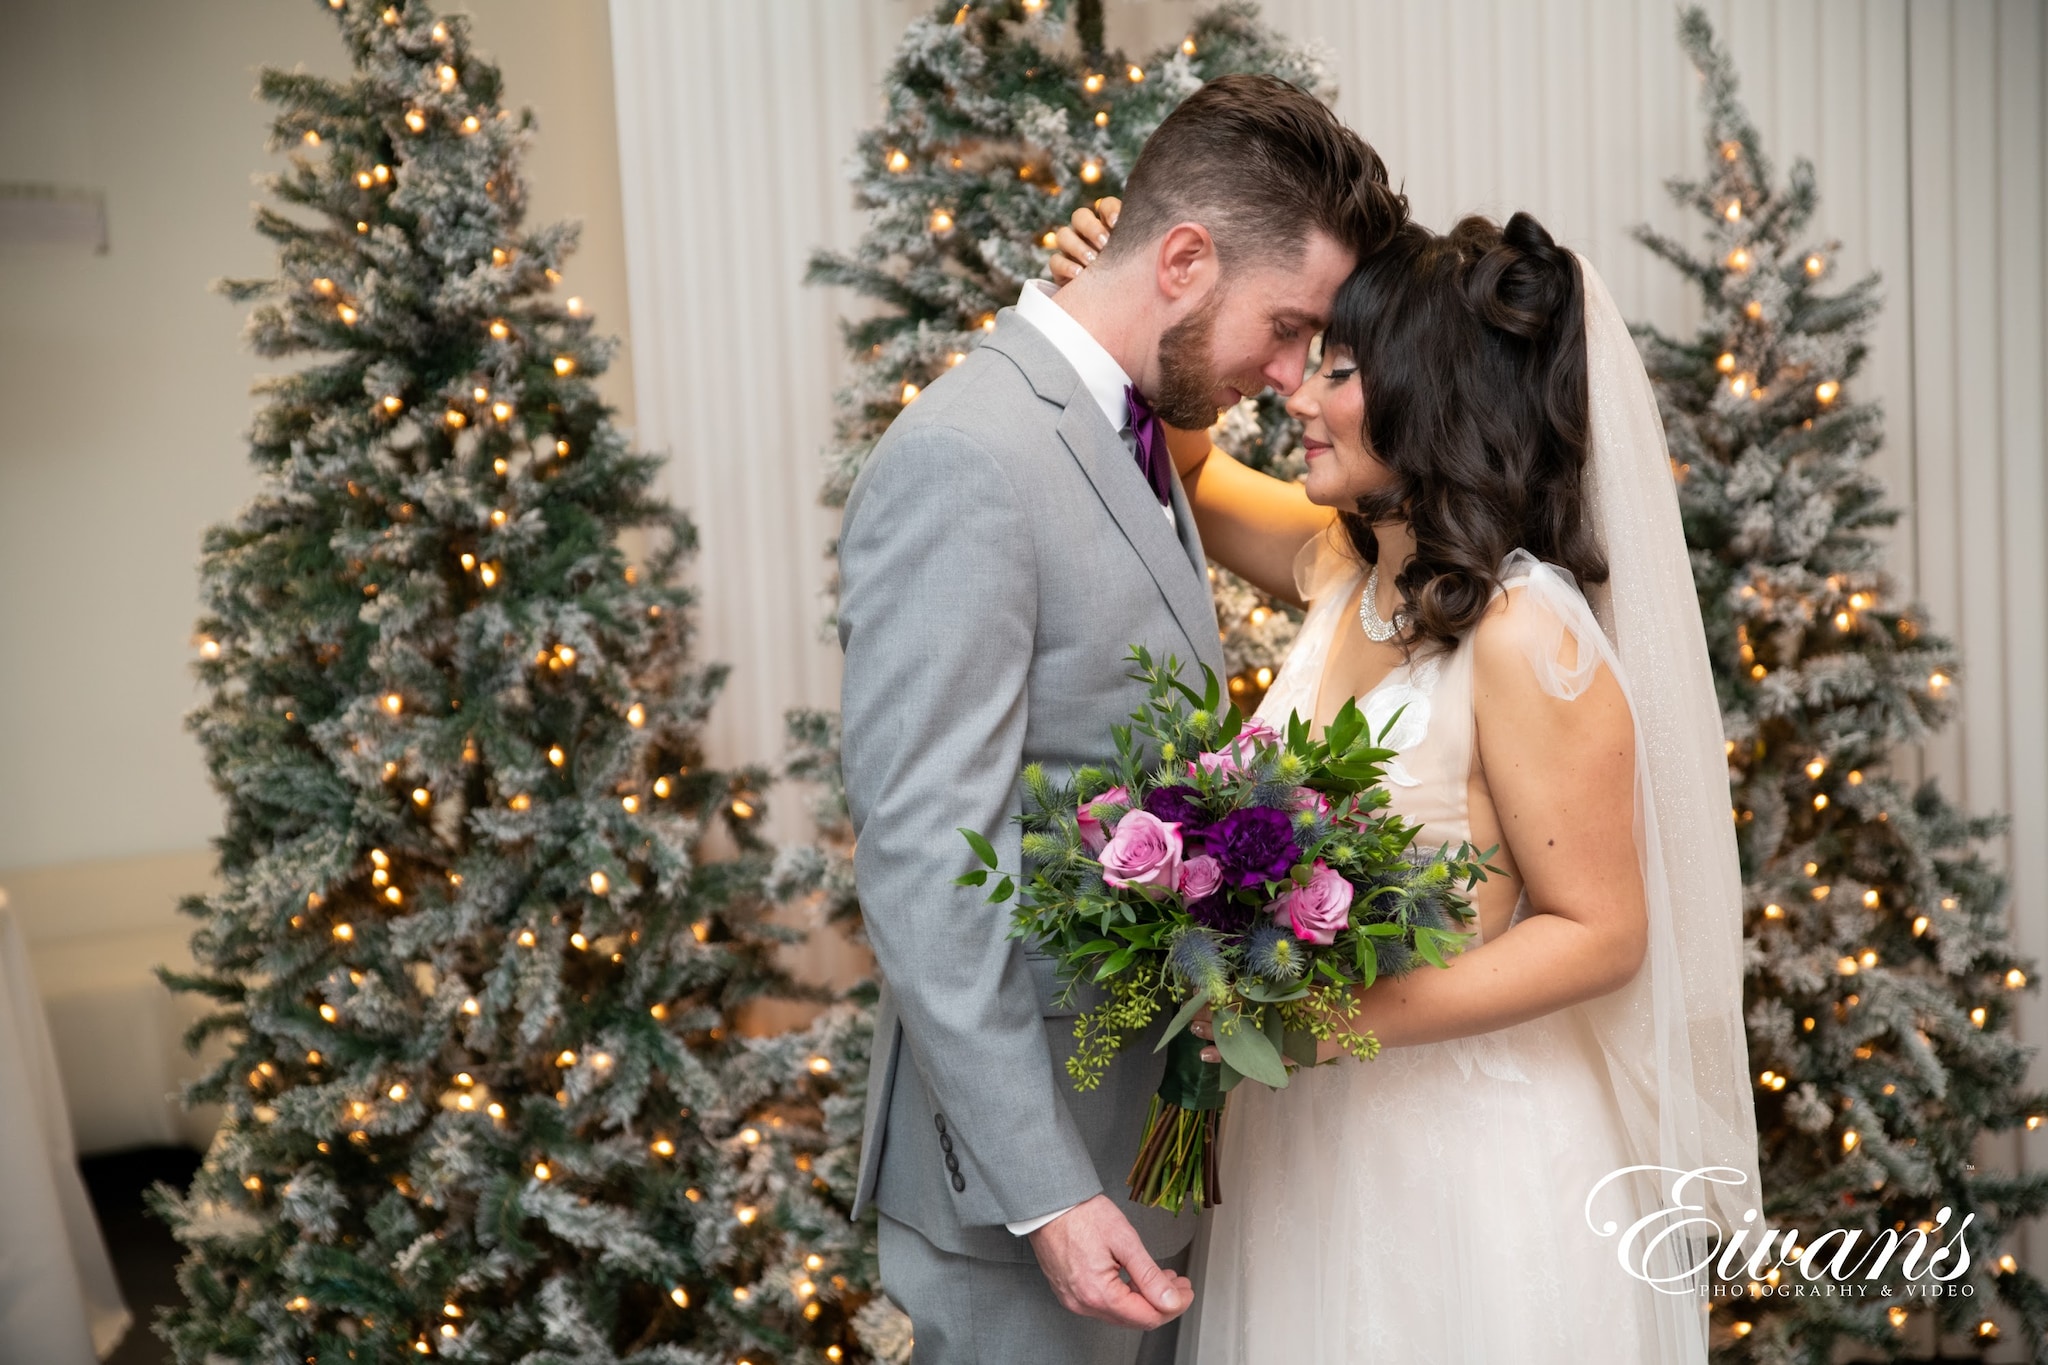 December weddings - Eivan's Photo Inc. | Wedding Photography & Video